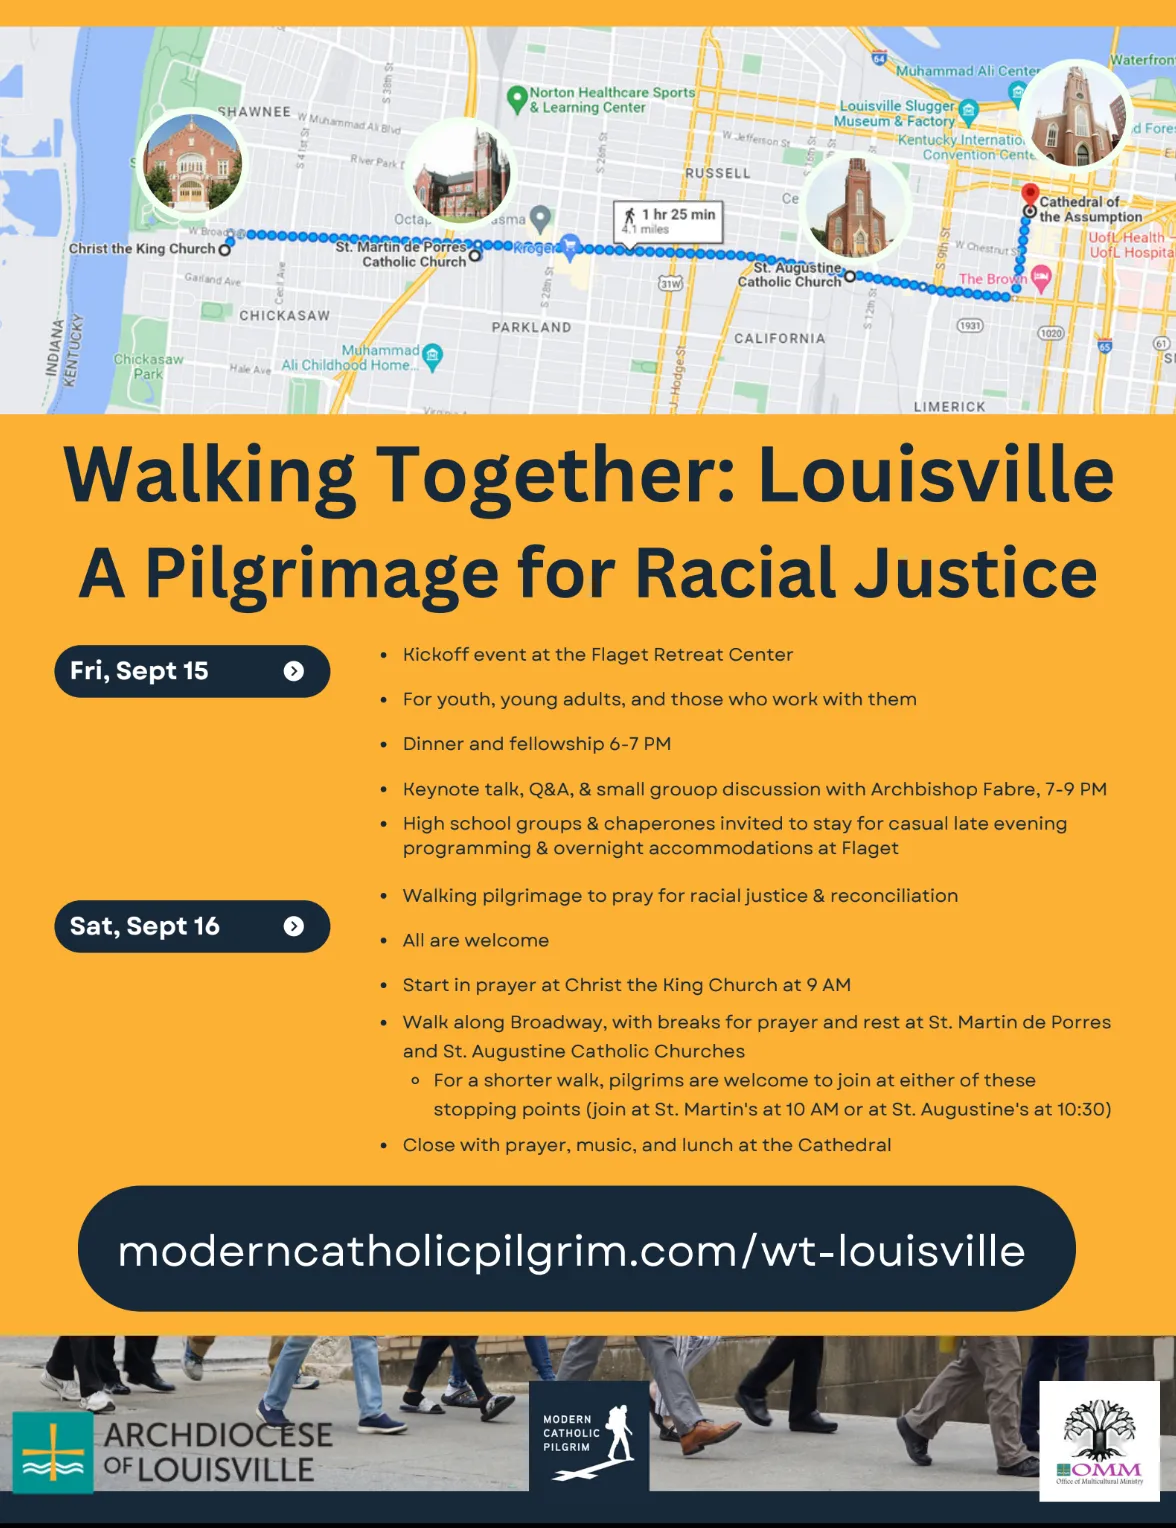 Louisville racial justice pilgrimage set for September